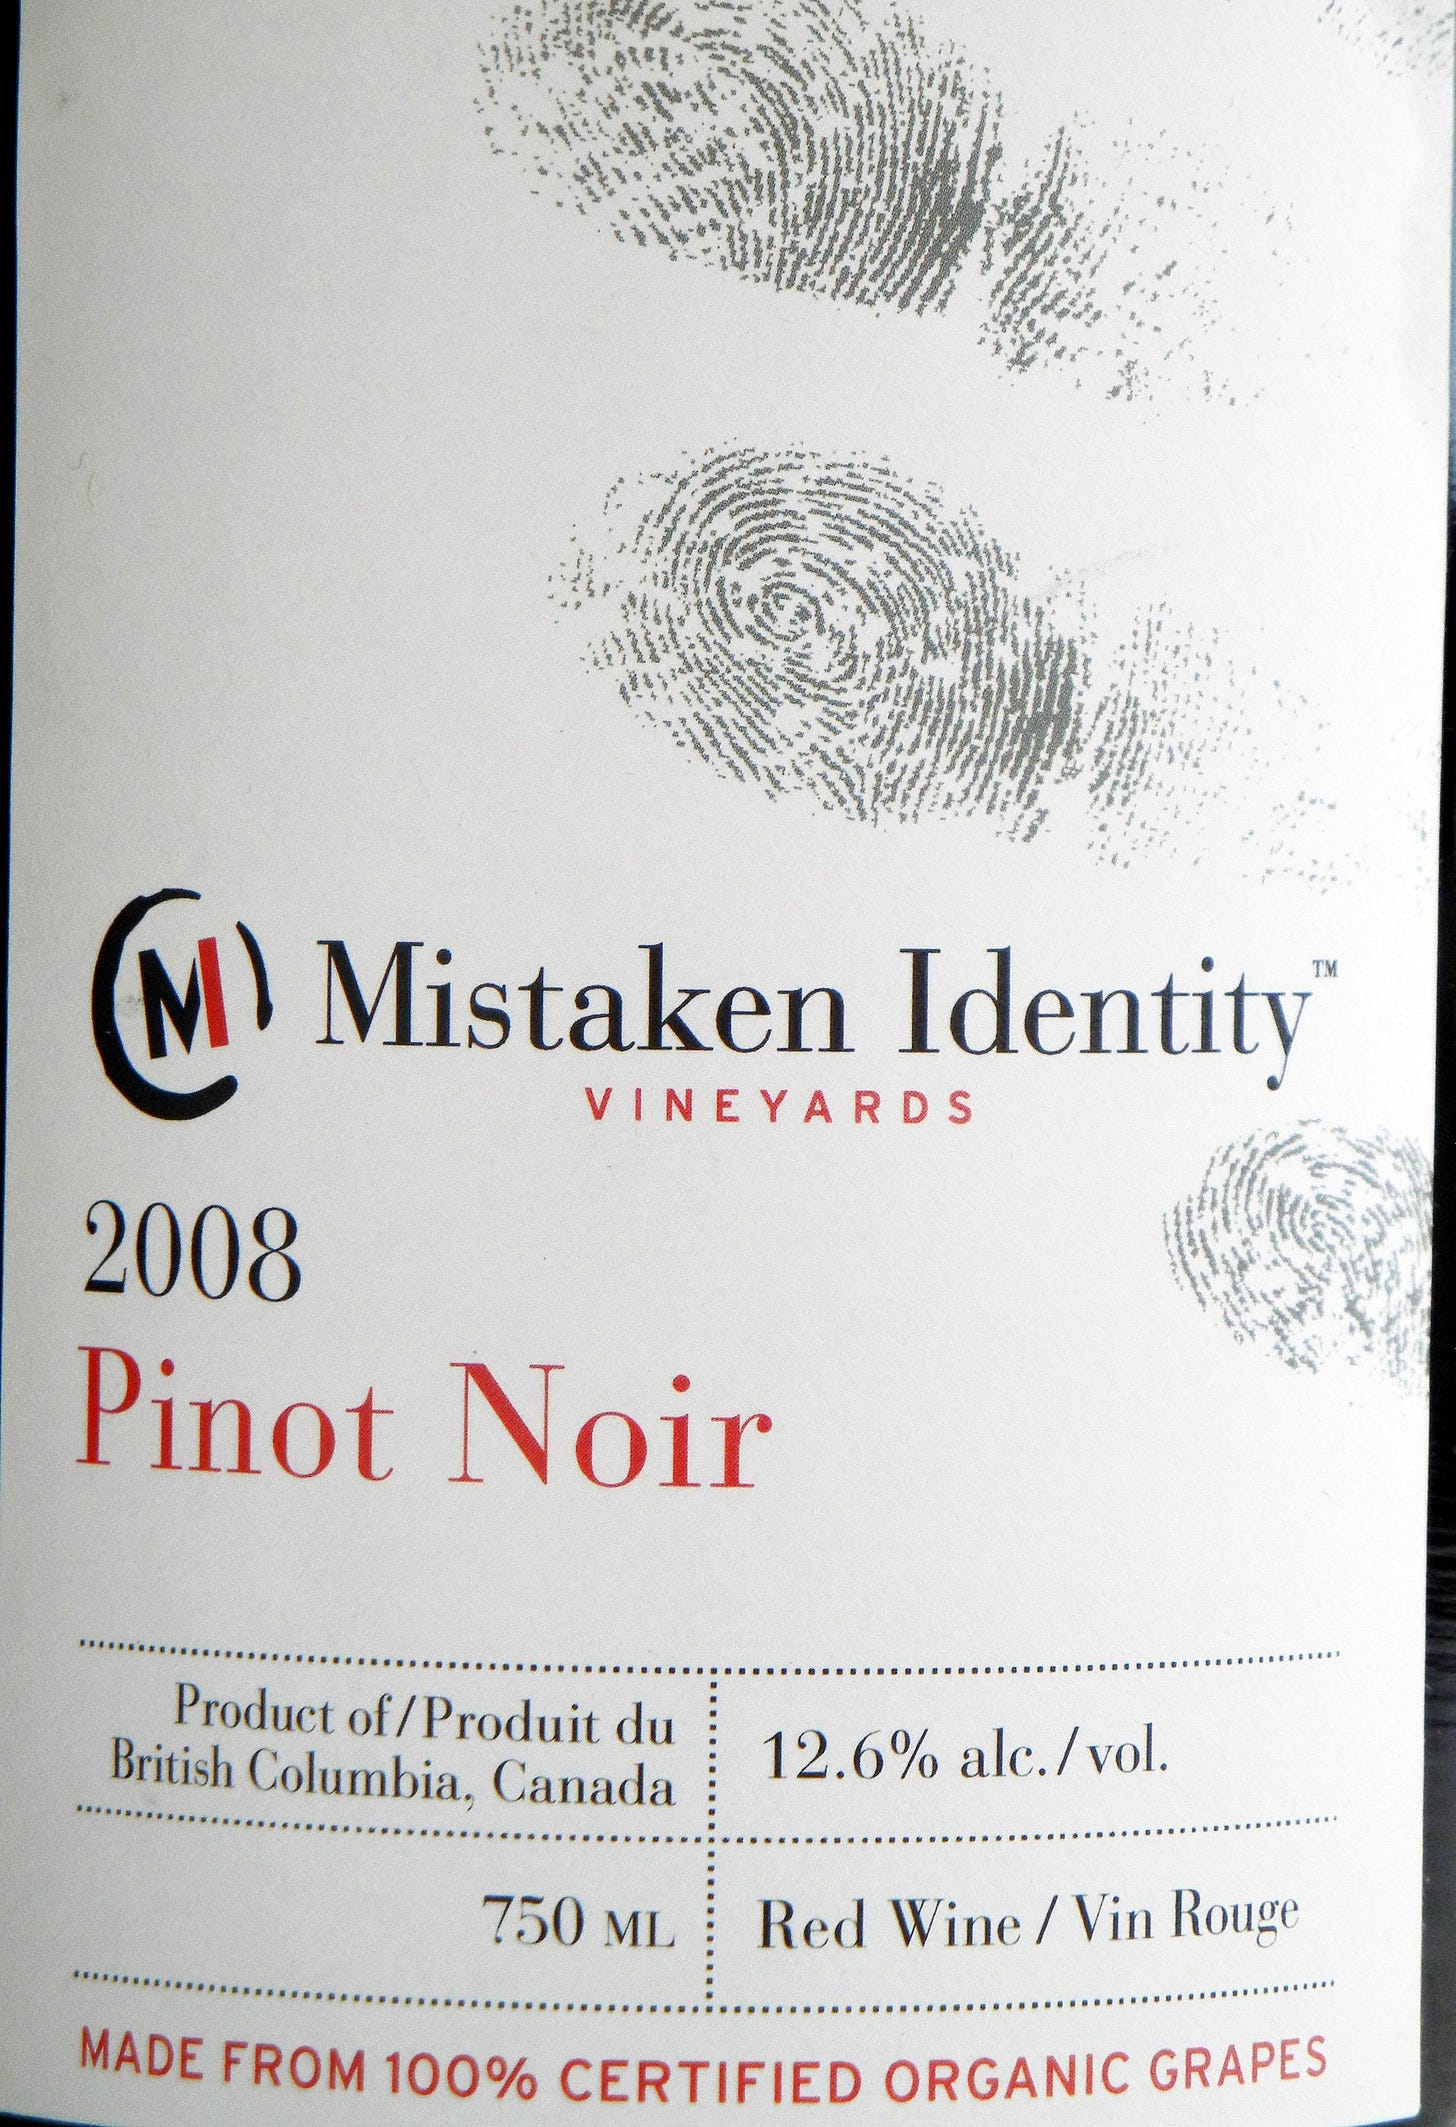 Mistaken Identity Pinot Noir 2008 Label - BC Pinot Noir Tasting Review 16